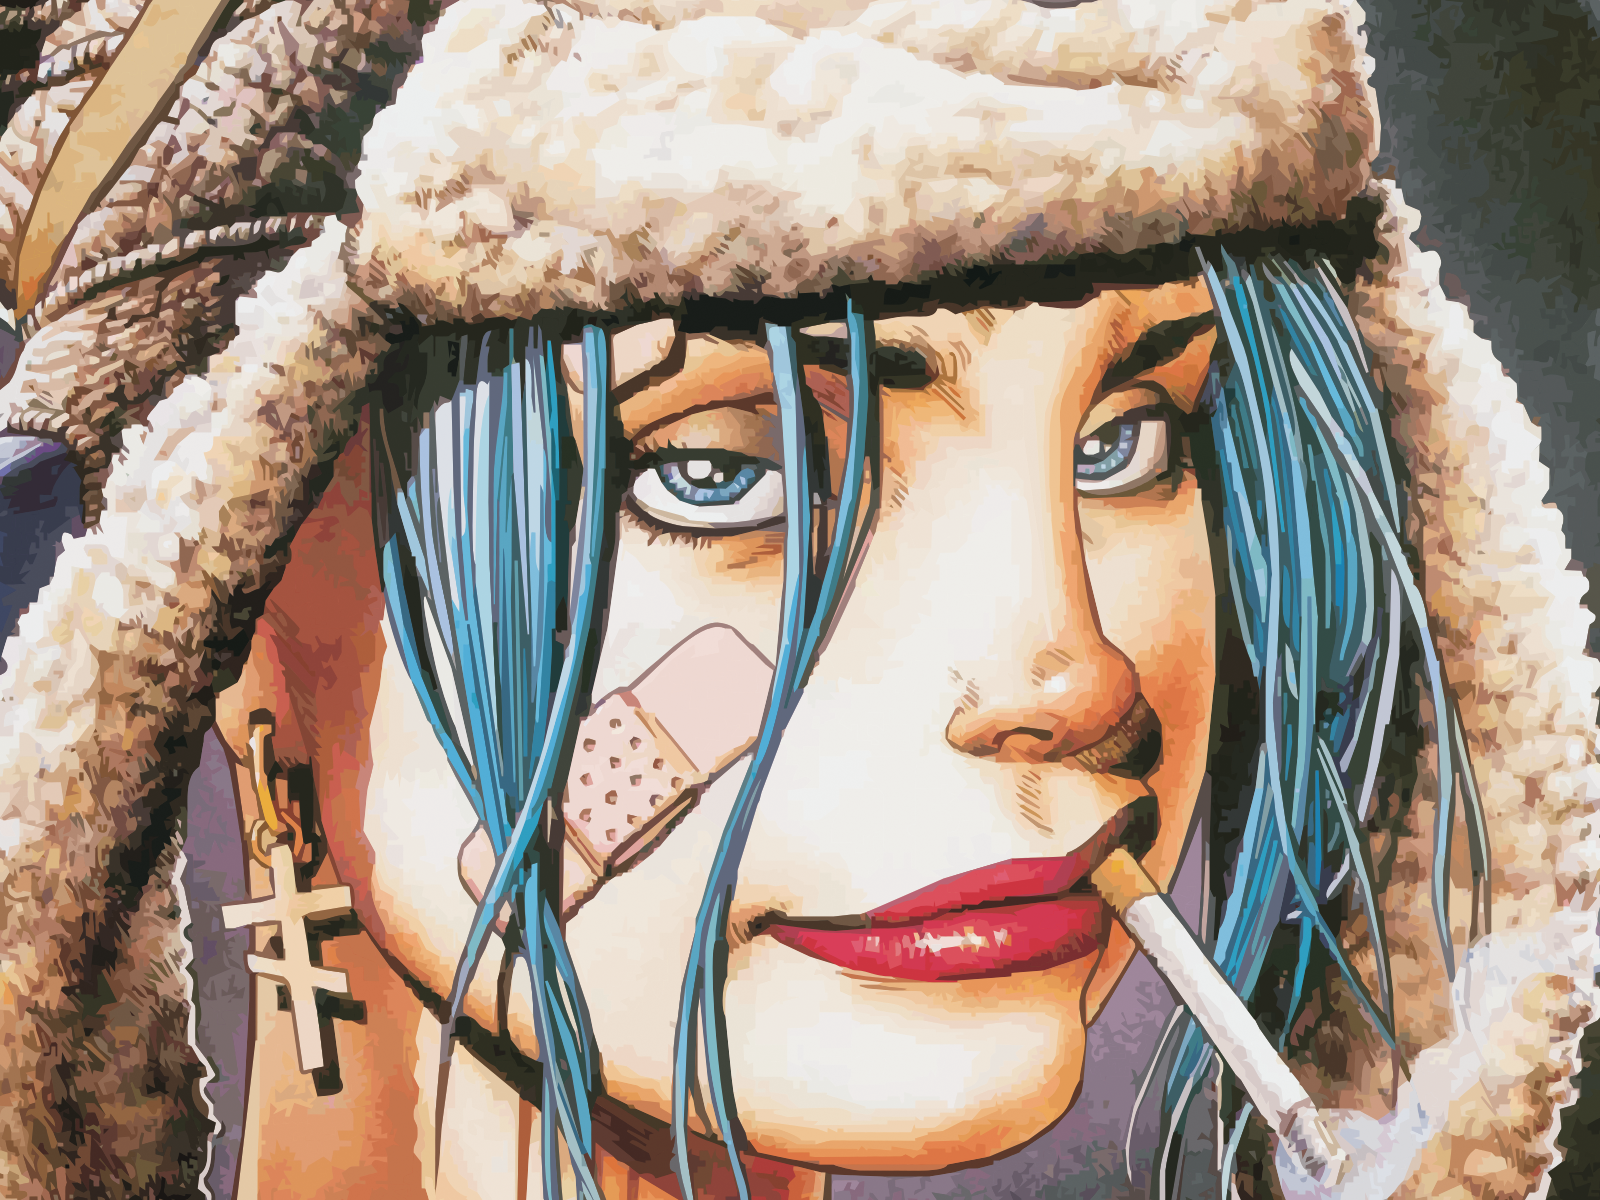 General 1600x1200 Tank Girl women smoking cigarettes science fiction science fiction women blue eyes blue hair face artwork comics